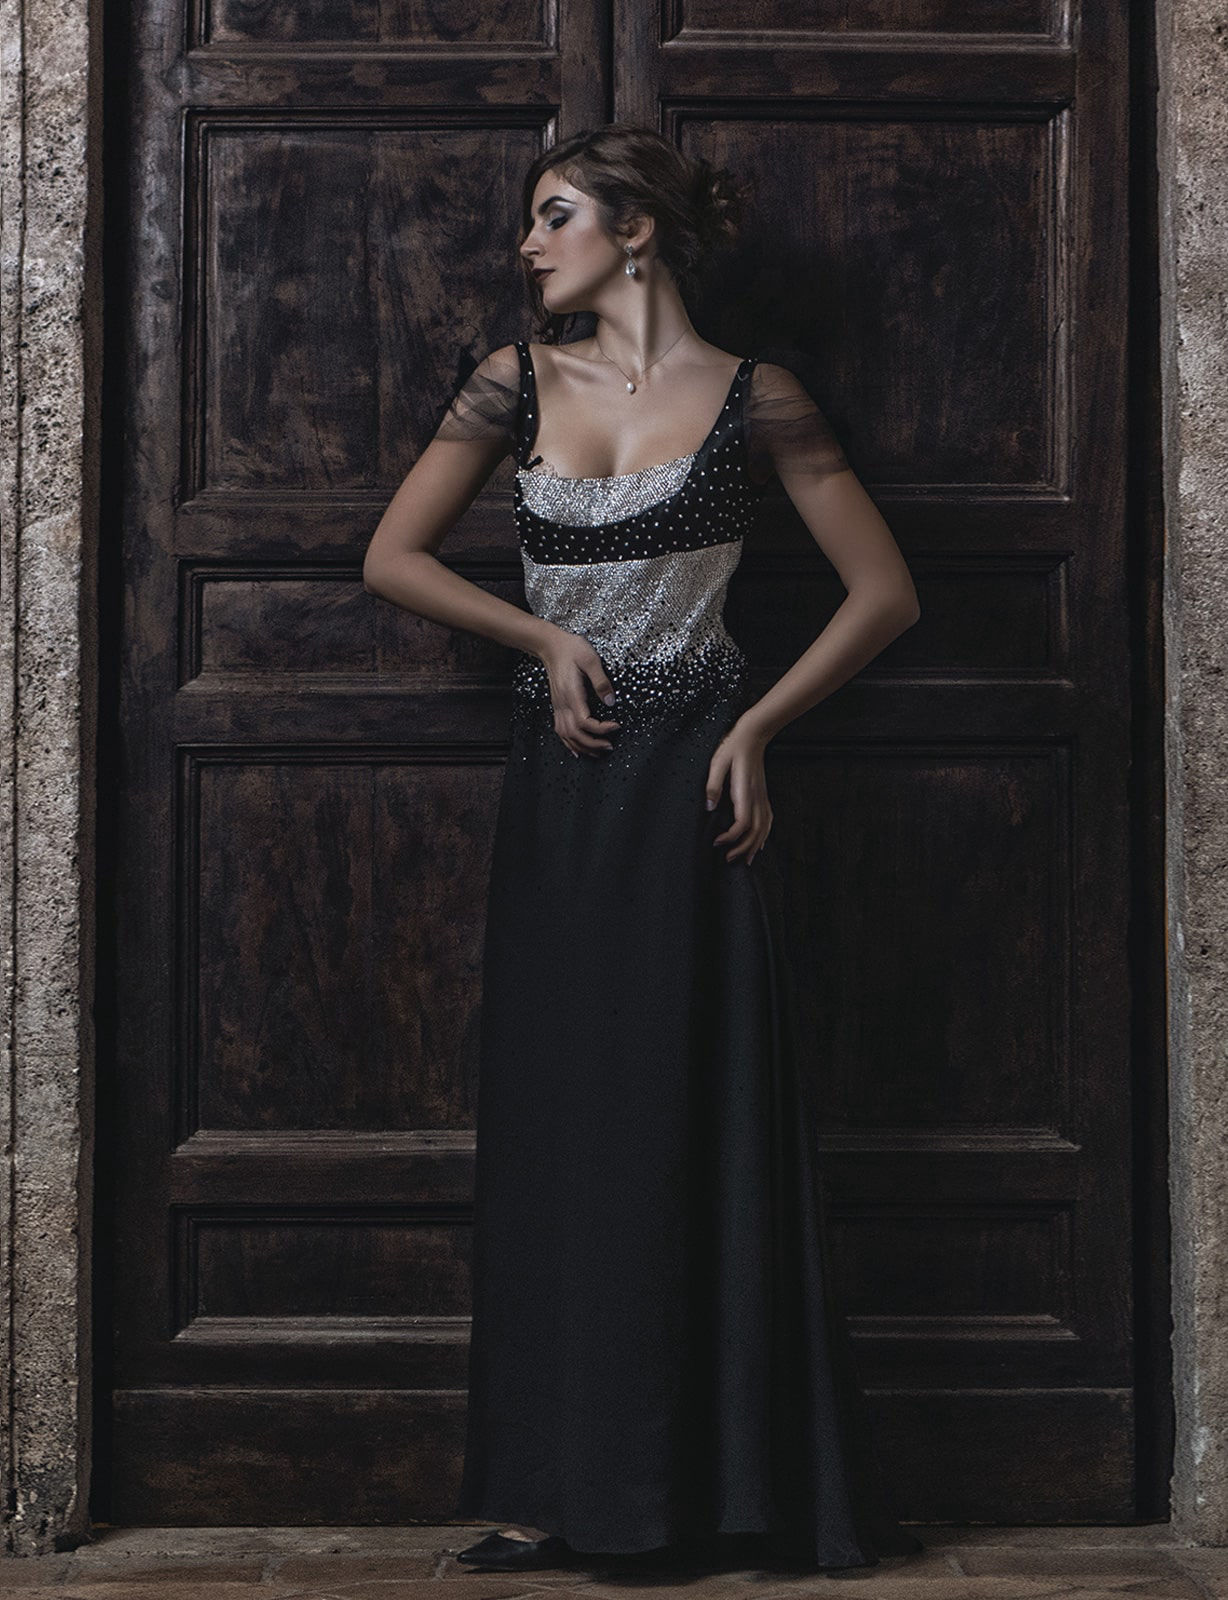 Fine art photography of a model wearing a black dress 